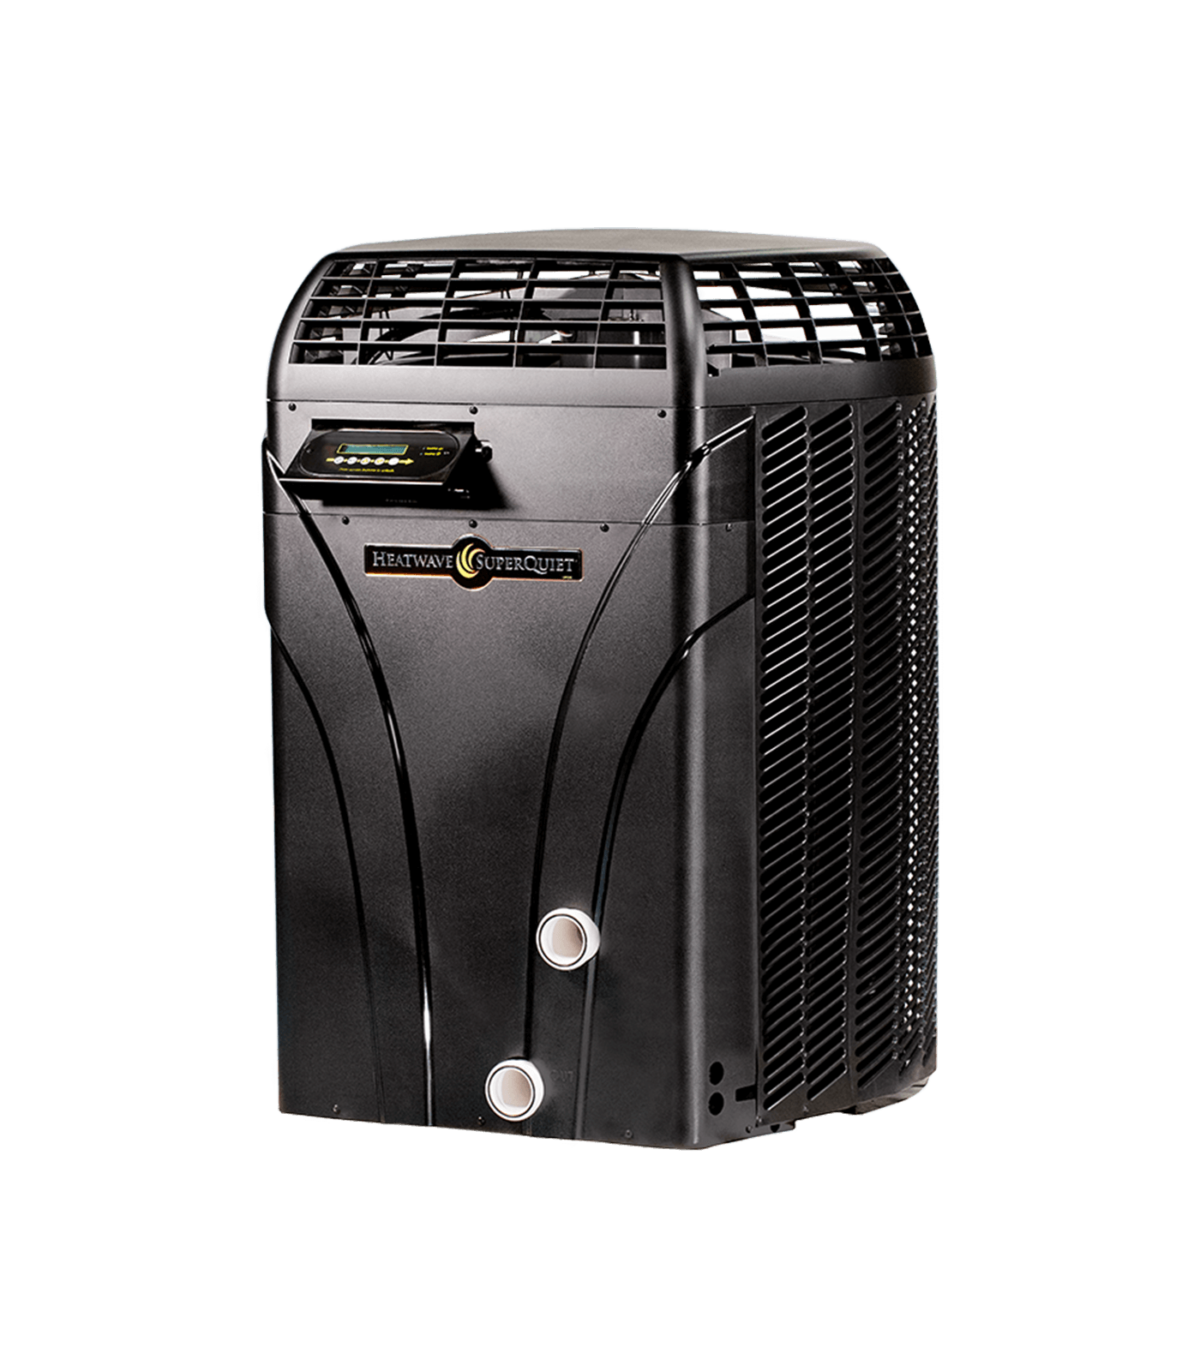 HeatWave SuperQuiet SQ166R | Black colored heater machine | Aquacal Heaters | Immerspa Fiberglass Inground Spas, Hot Tubs & Pools